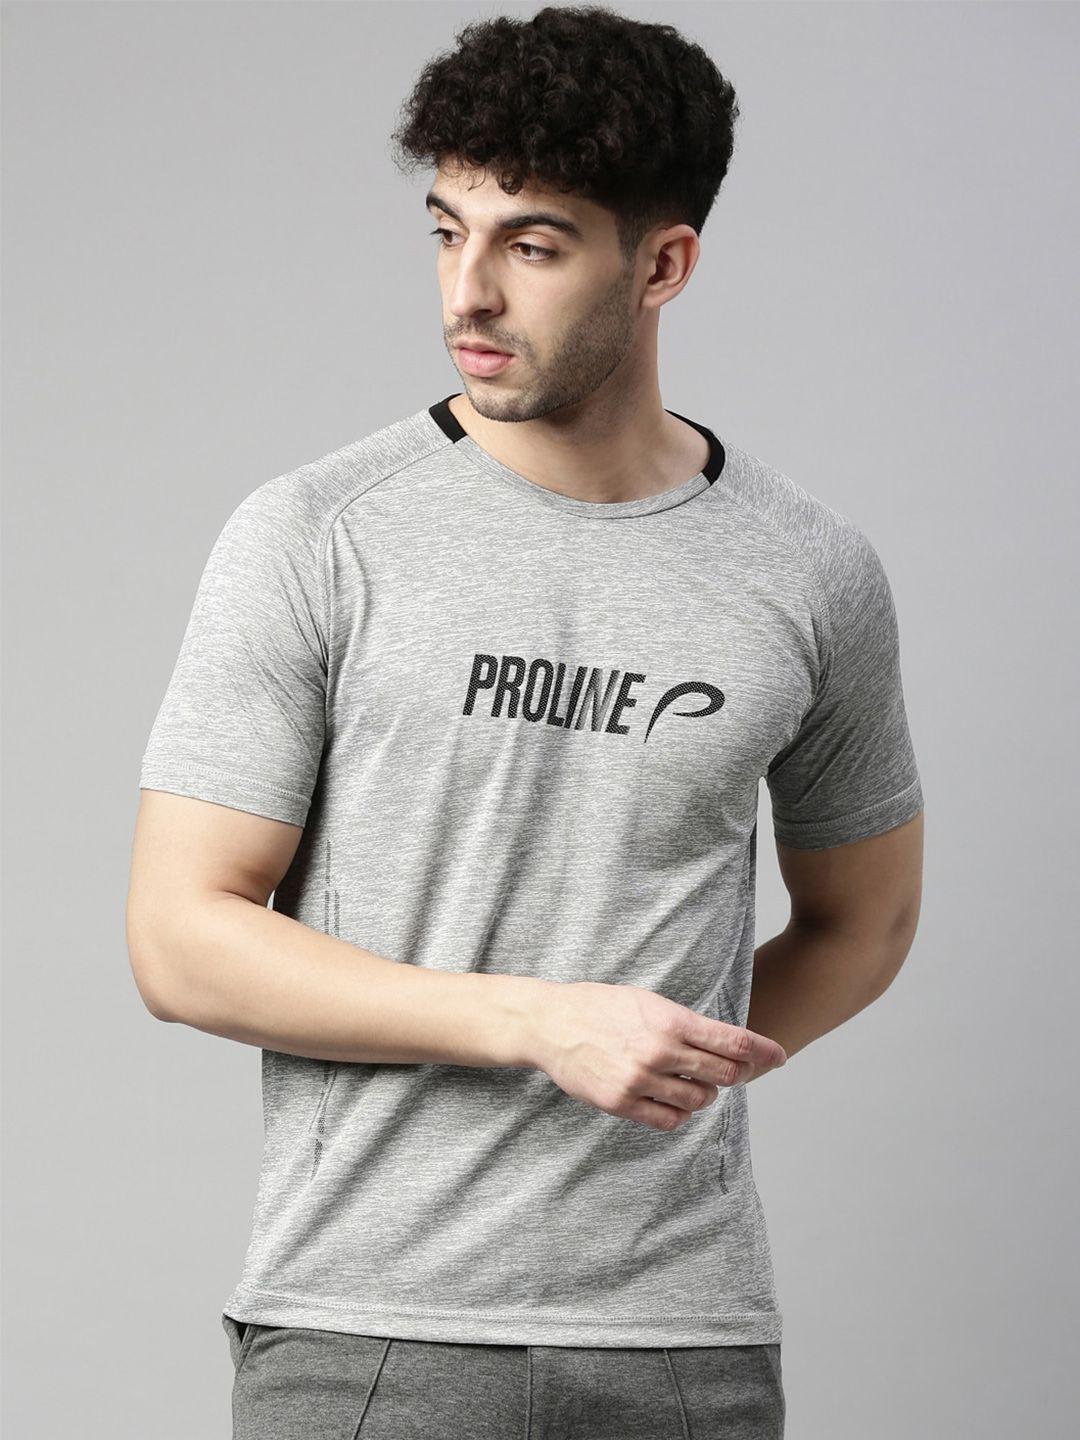 proline typography printed raglan sleeves sports t-shirt